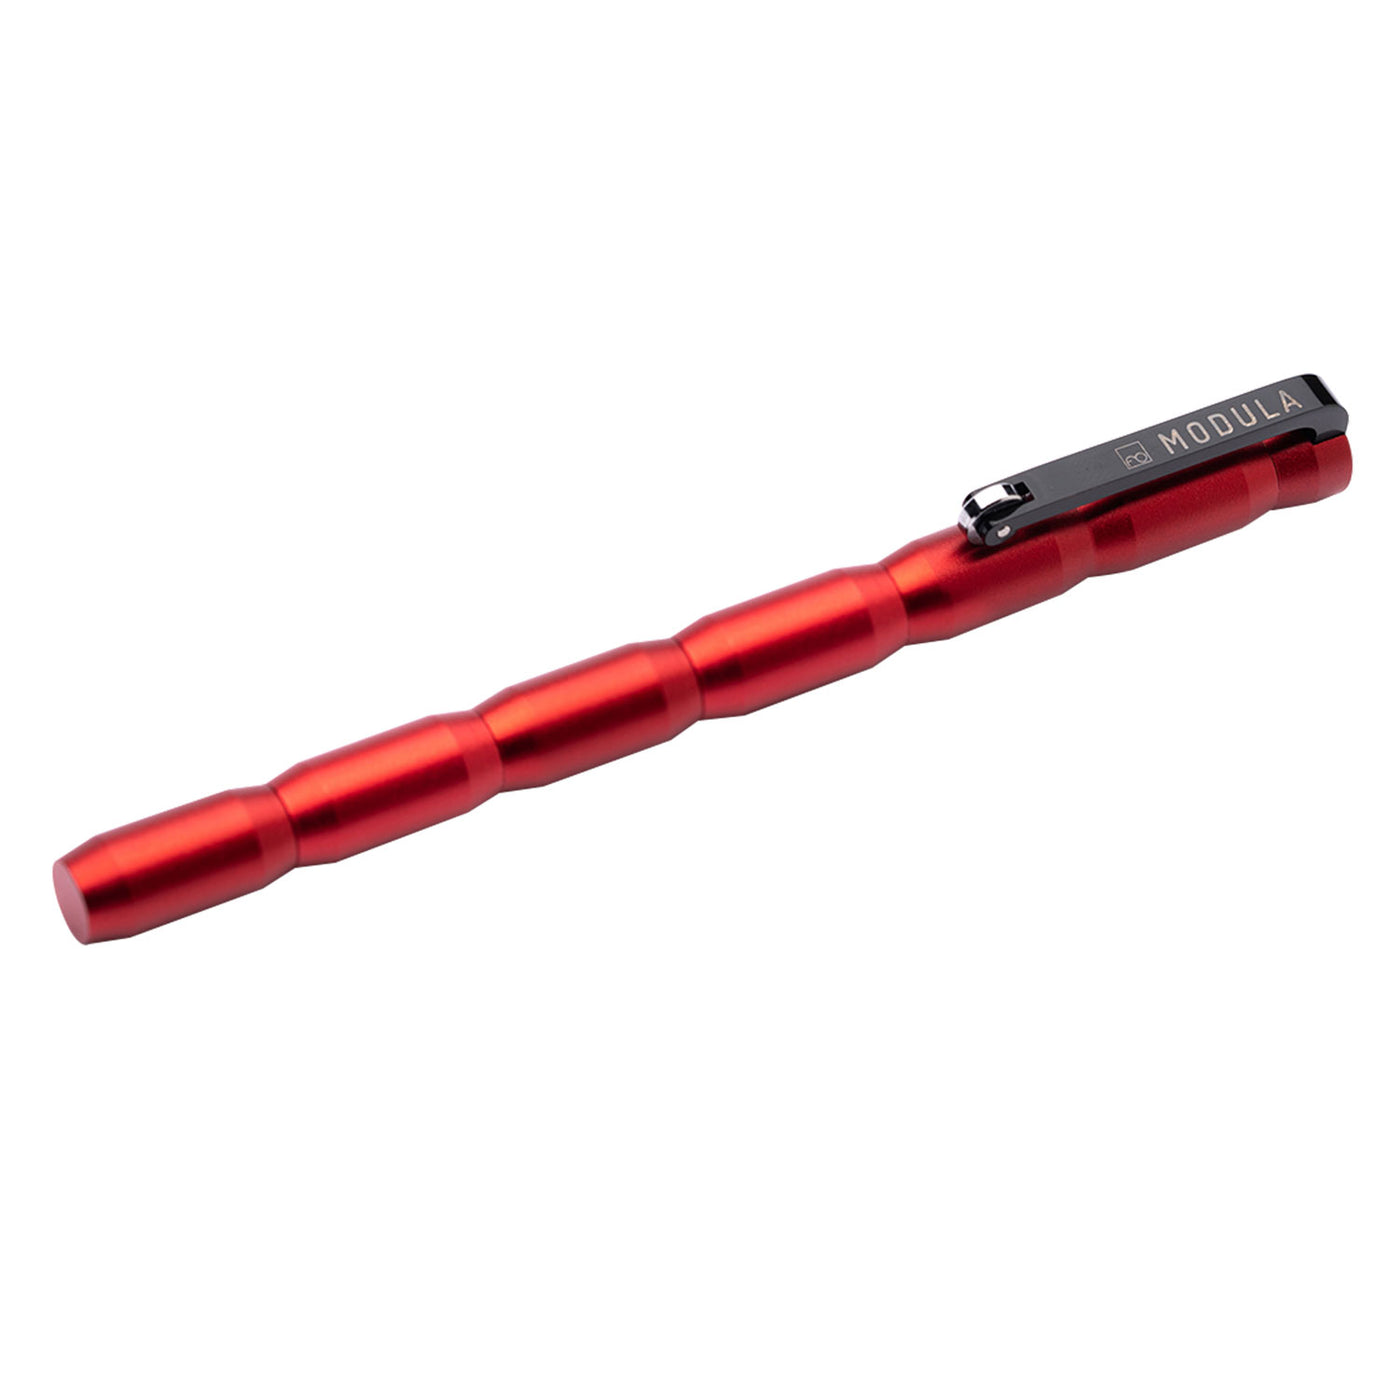 Pininfarina Segno Forever Modula Multifunction Pen - Red 2